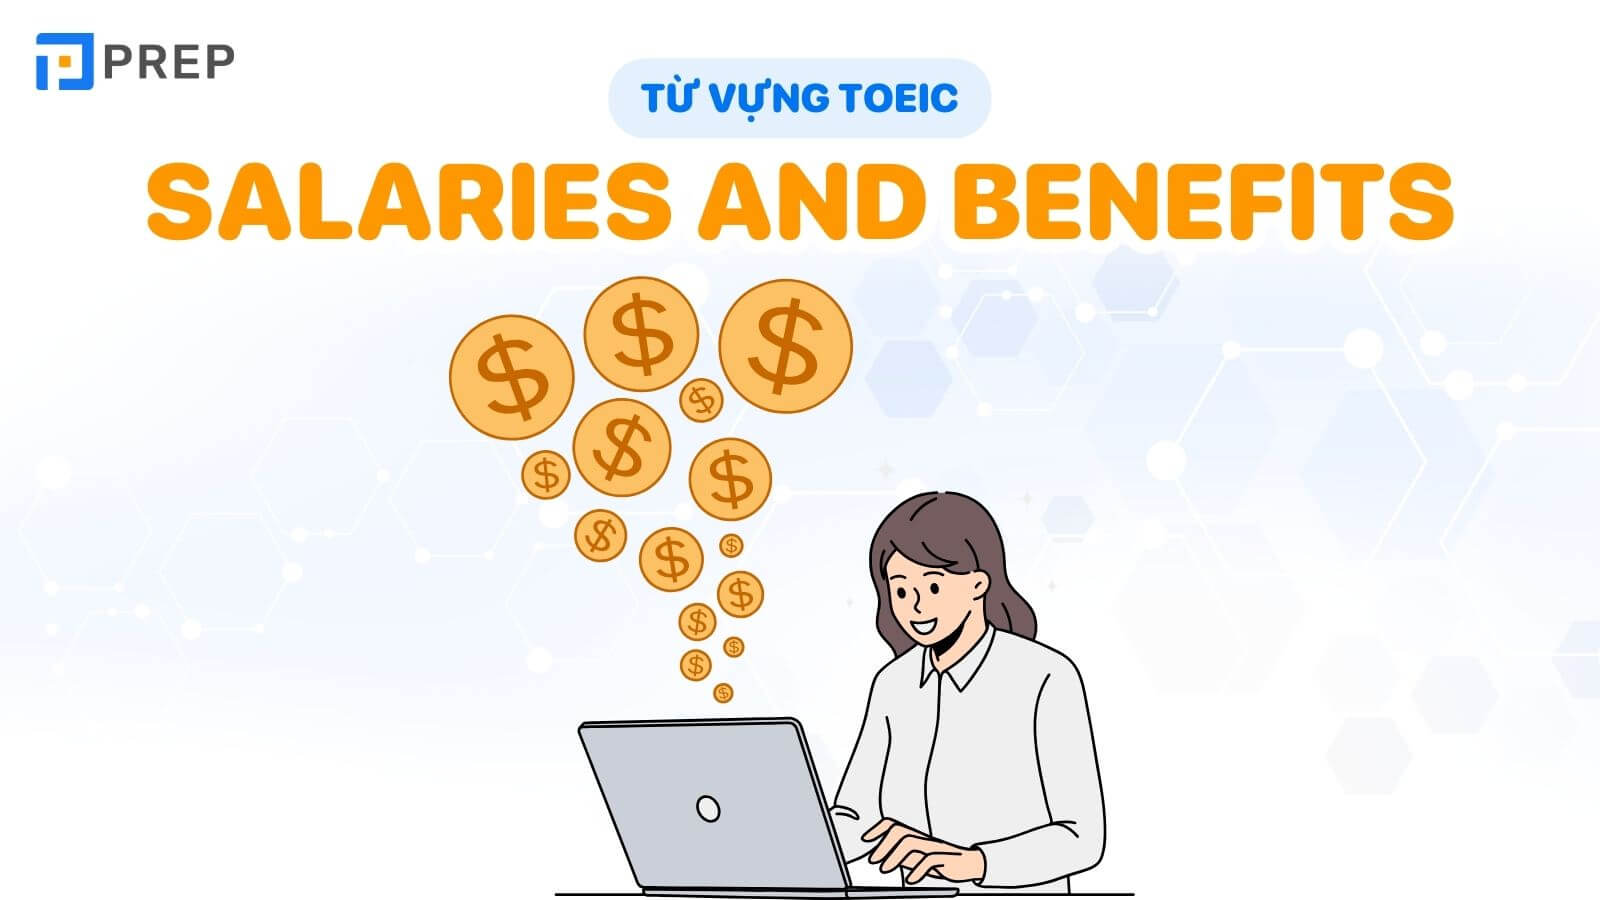 tu-vung-toeic-chu-de-salaries-and-benefits.jpg